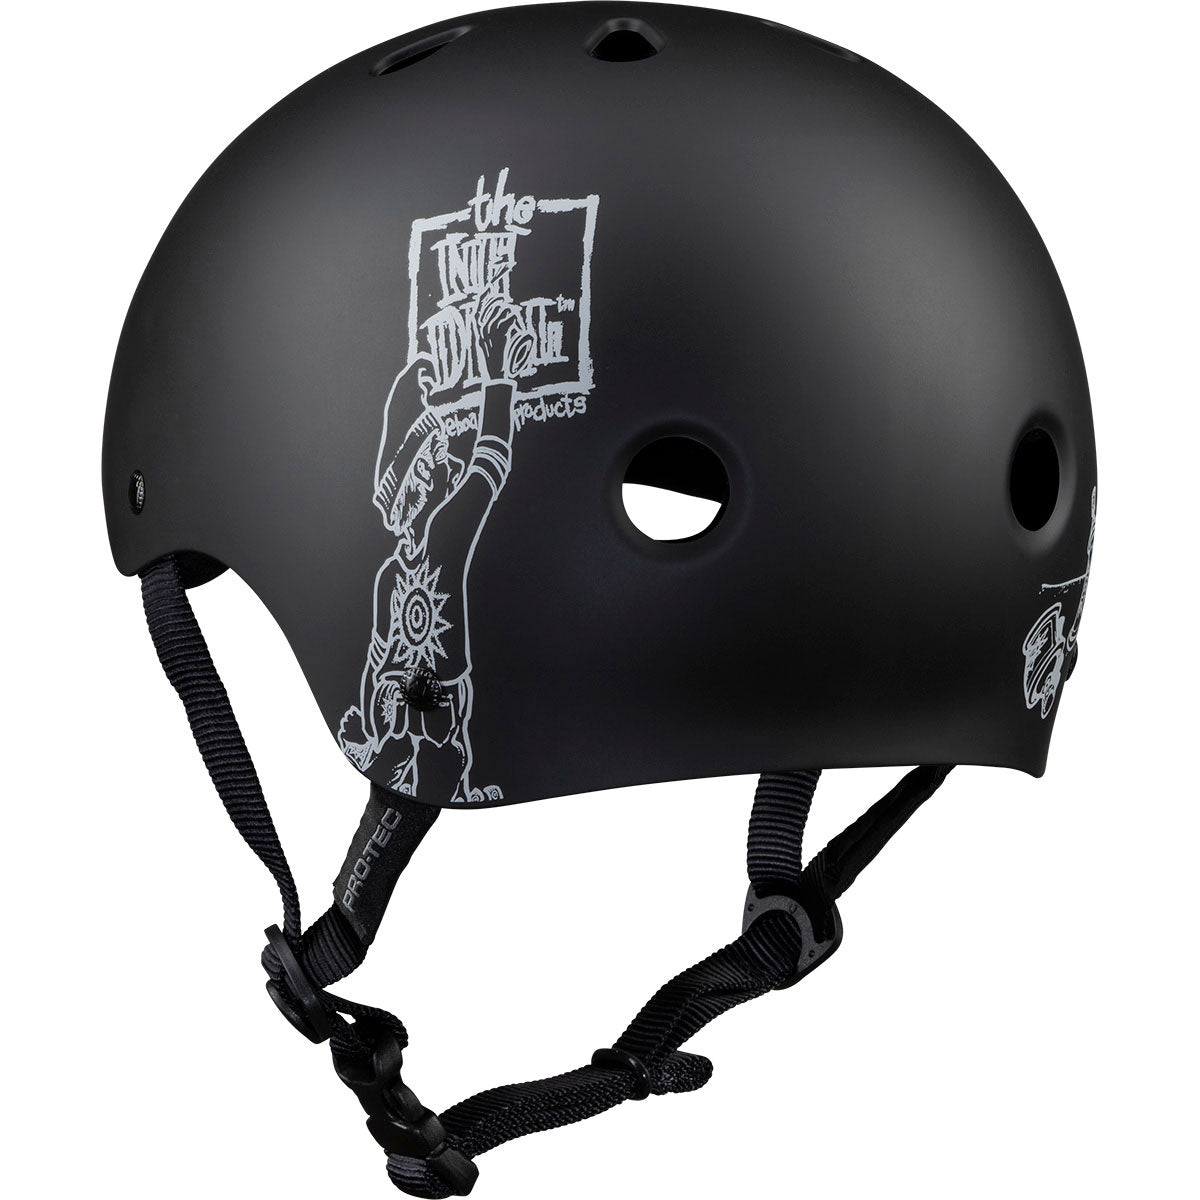 Pro Tec x New Deal Spray Helmet - Black image 2